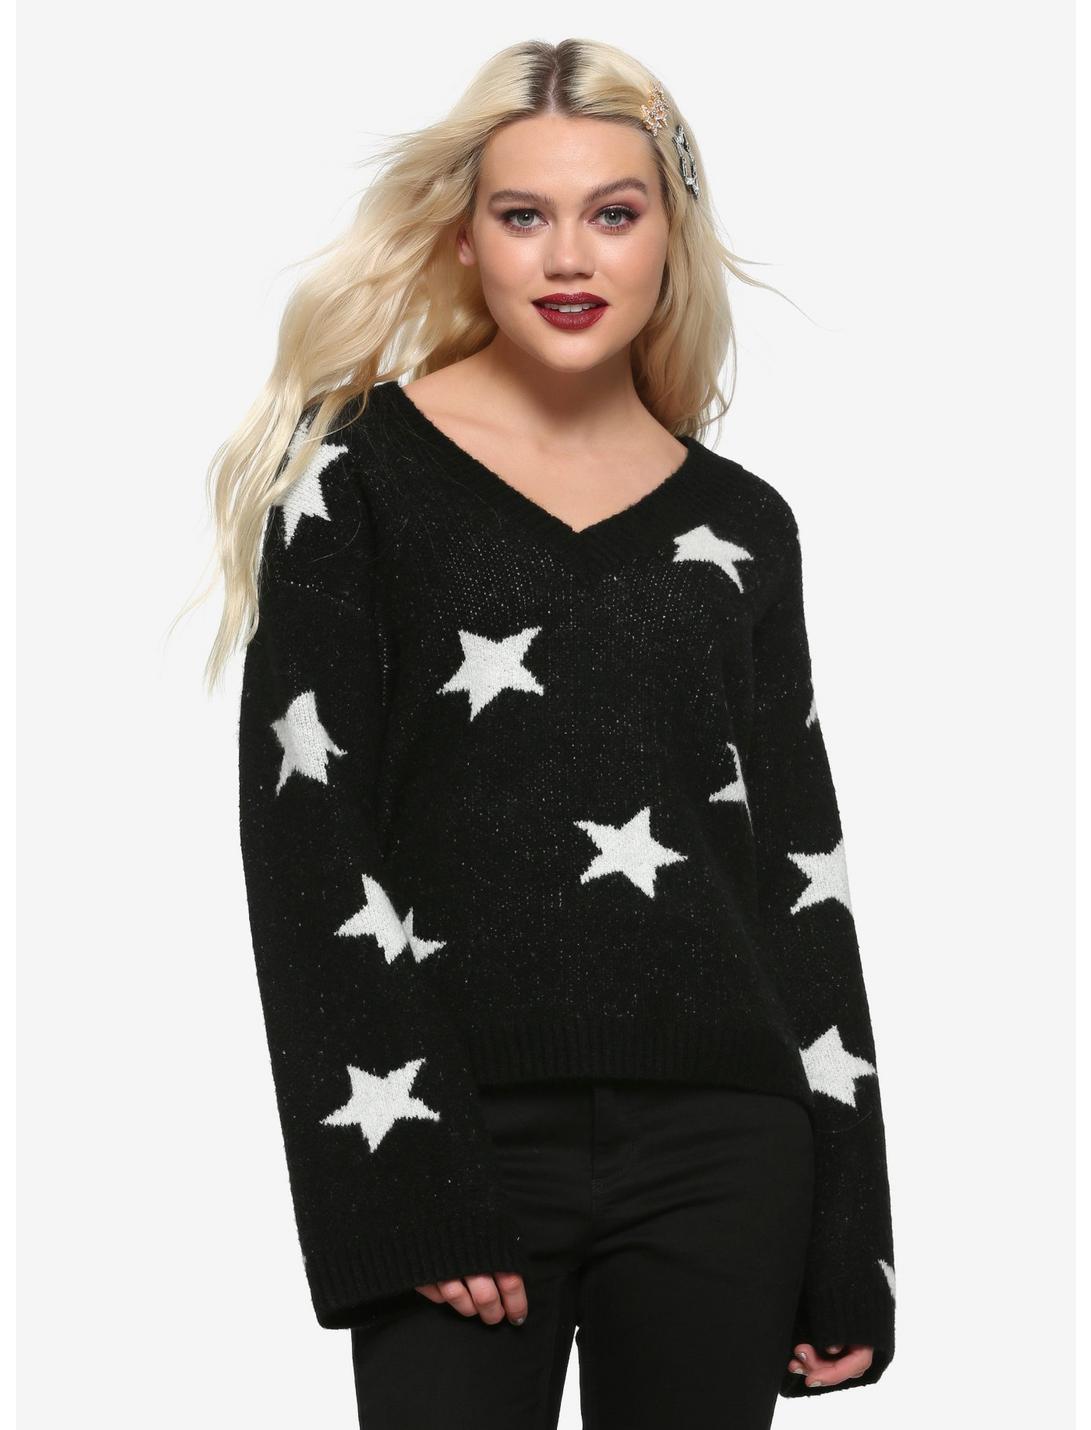 Black & White Star Girls Sweater, WHITE, hi-res